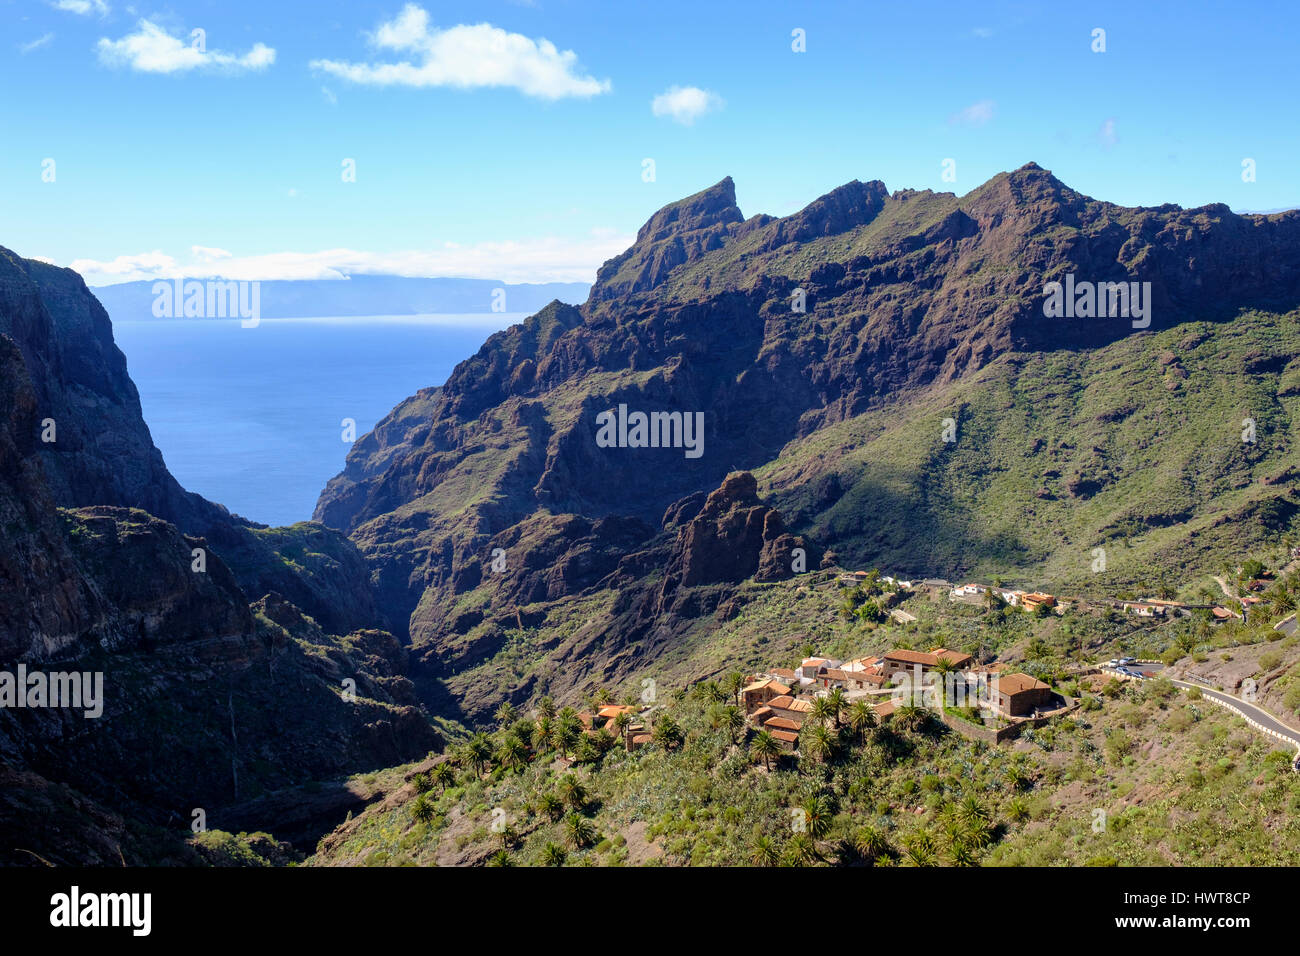 Masca and Masca Gorge, Barranco de Masca, Teno Mountains, Teno Rural Park, Tenerife, Canary Islands, Spain Stock Photo